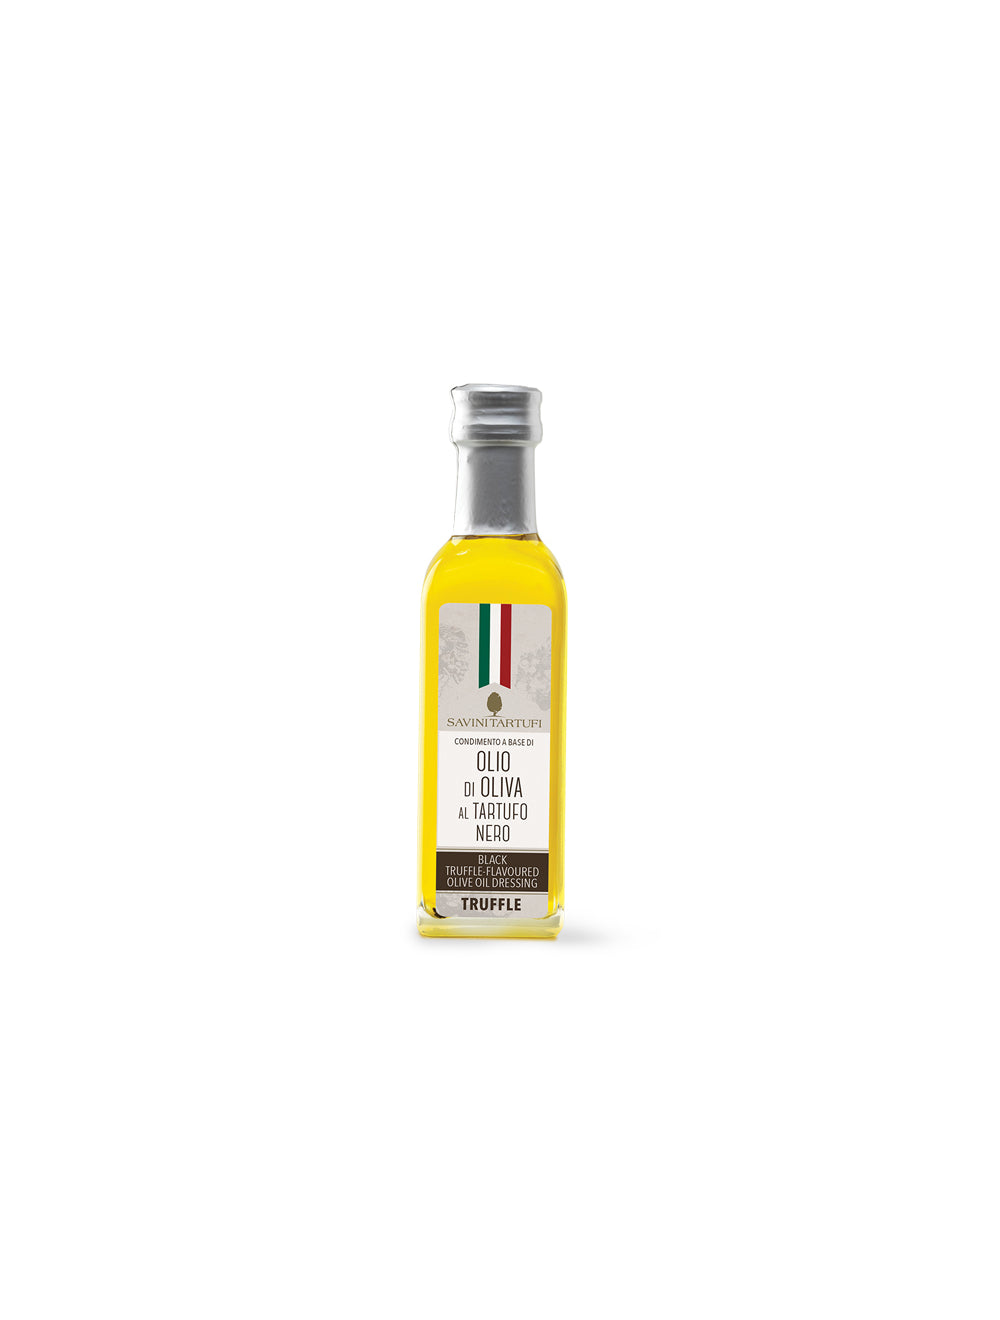 SPECIAL - NEW! "Olio di Oliva al Tartufo Nero" Olive Oil with Black Truffle flavor by Savini Tartufi, 8.45 oz, 6/CS